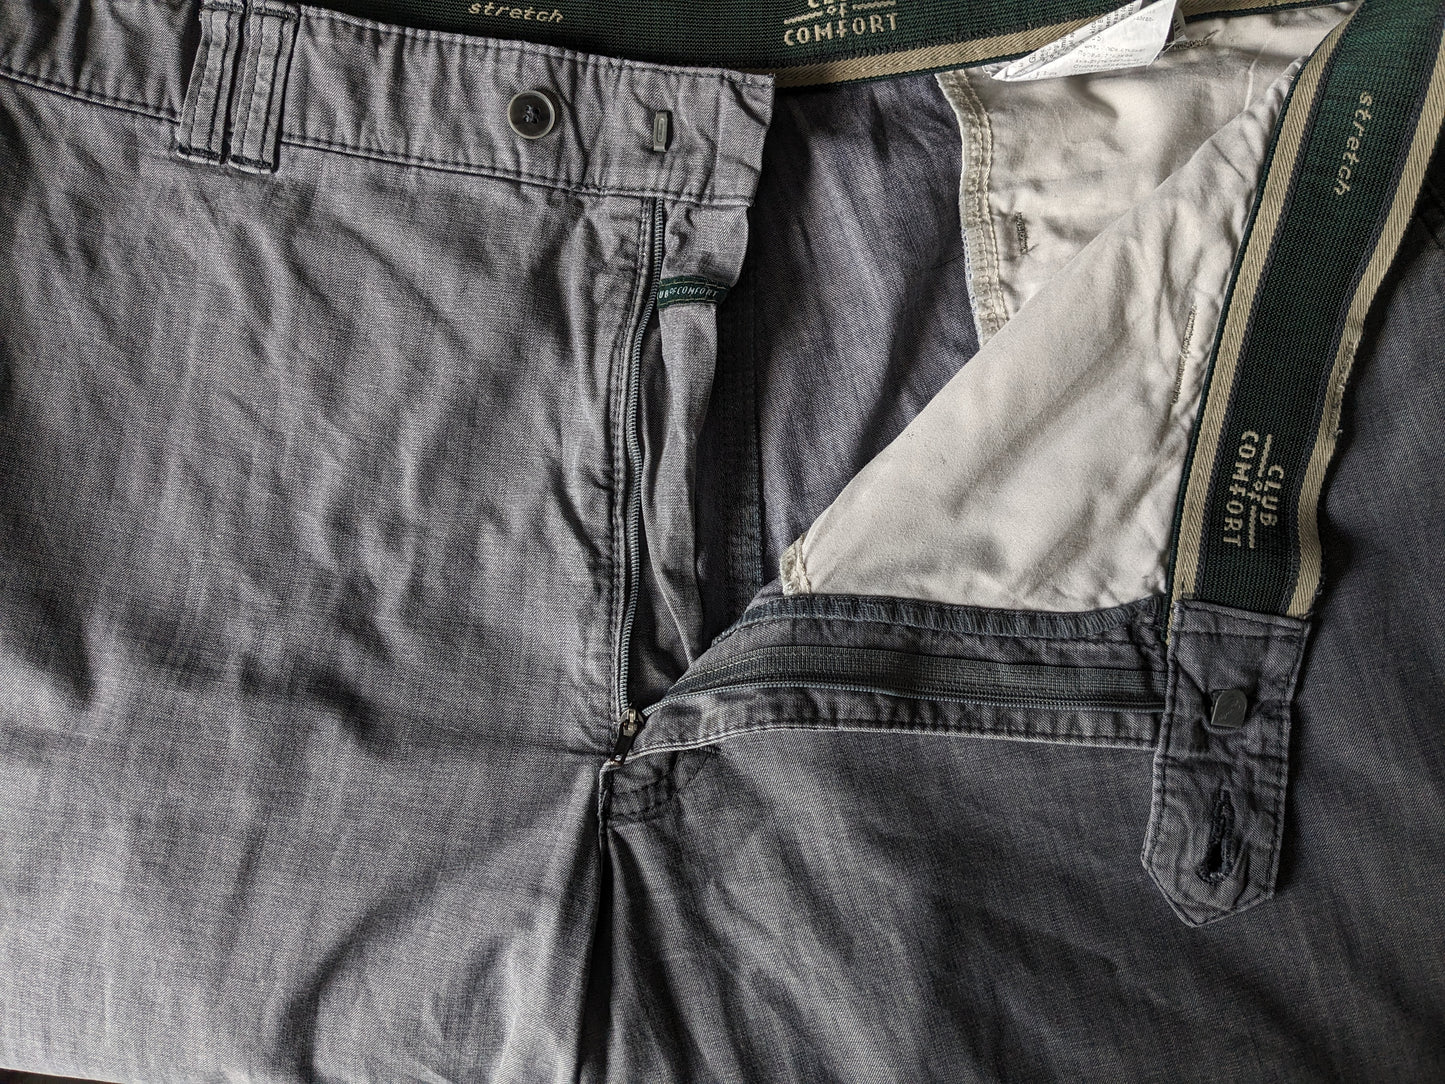 Pantaloni / pantaloni da club o comfort. Moto grigio. Dimensione 29 (58 / 2xl / xxl)